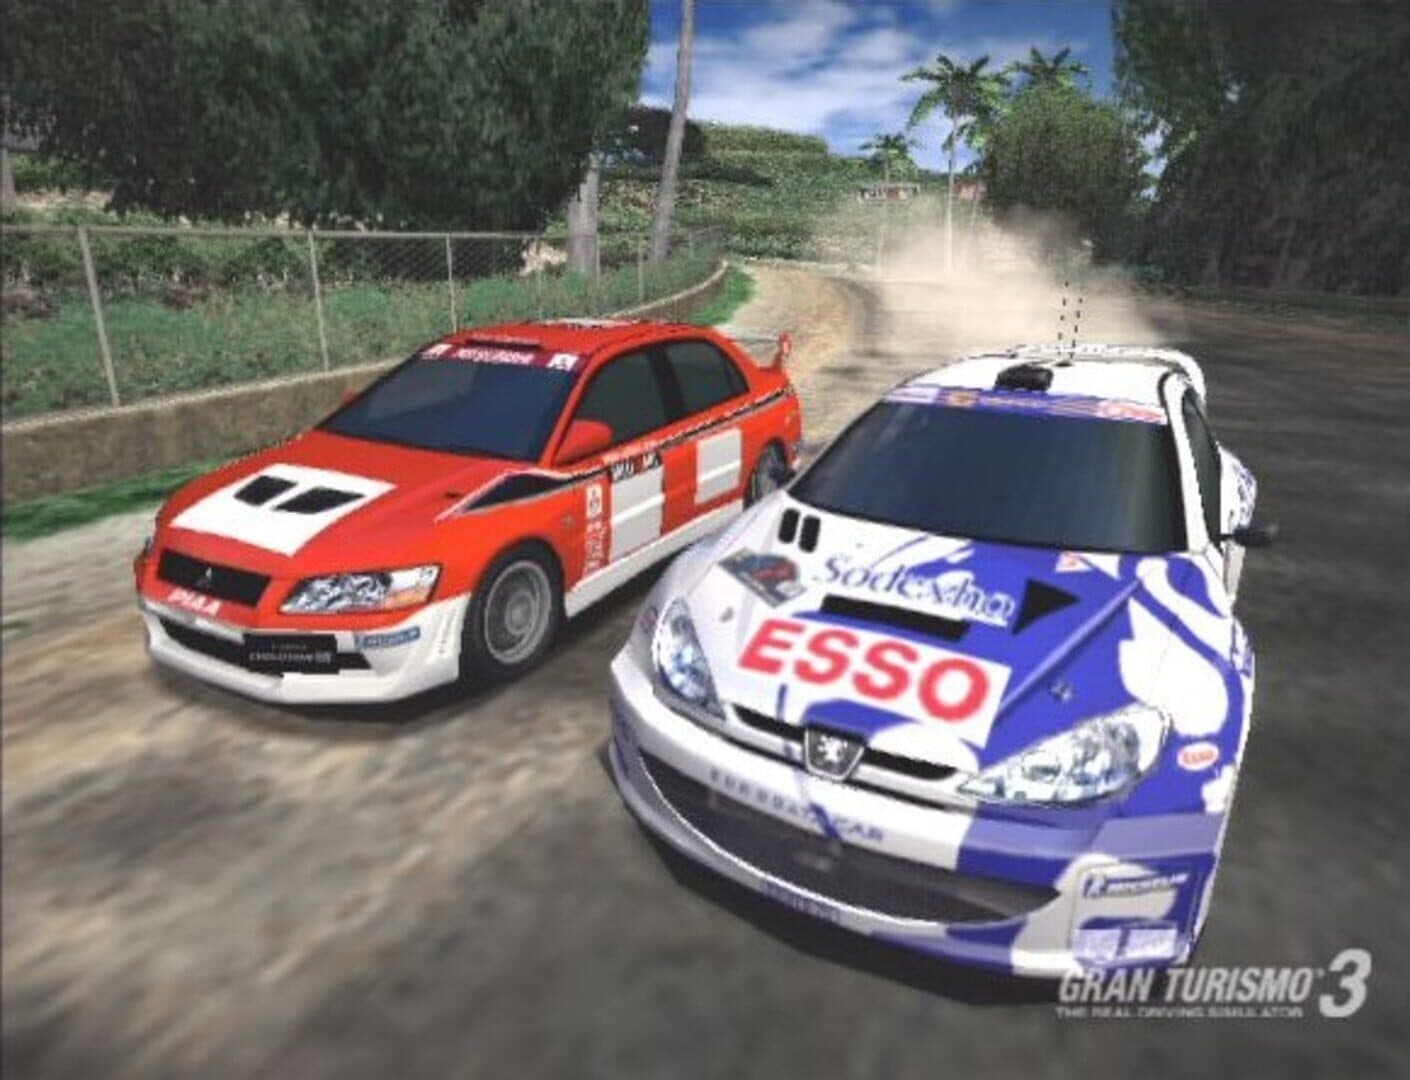 Gran Turismo 3: A-Spec Image